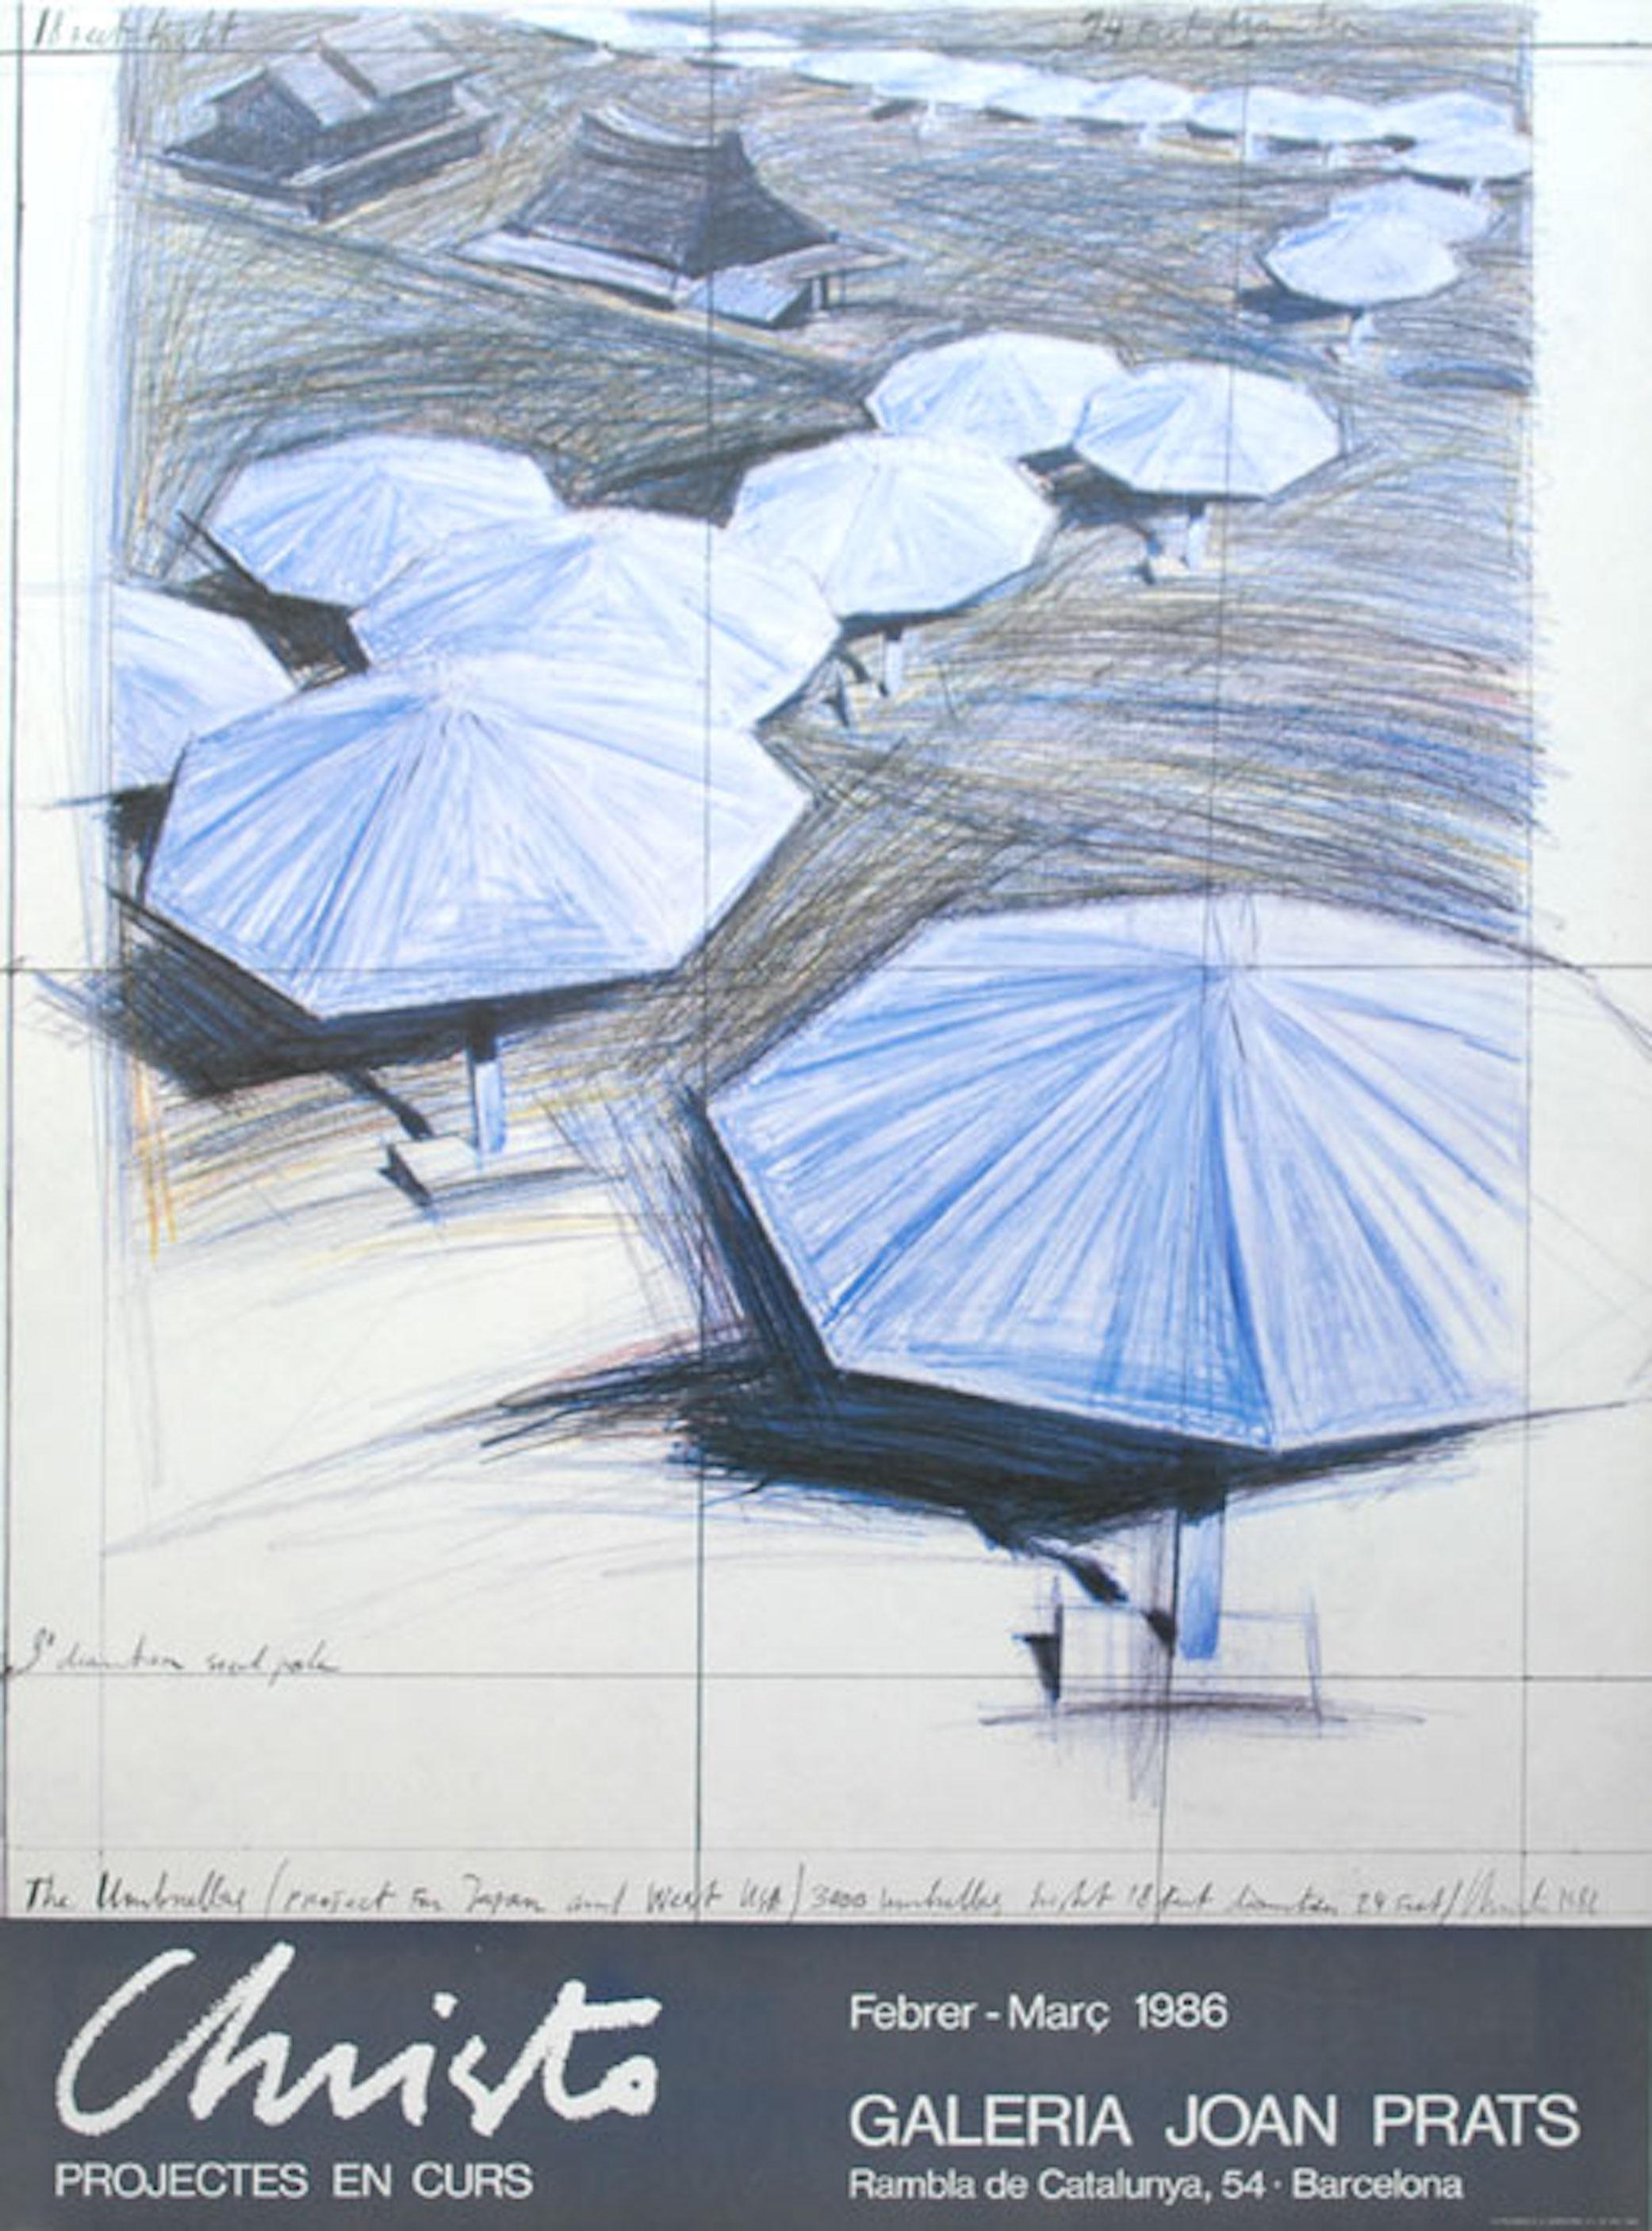 Galeria Joan Prats - Beach Umbrella Sketch - Print by Christo